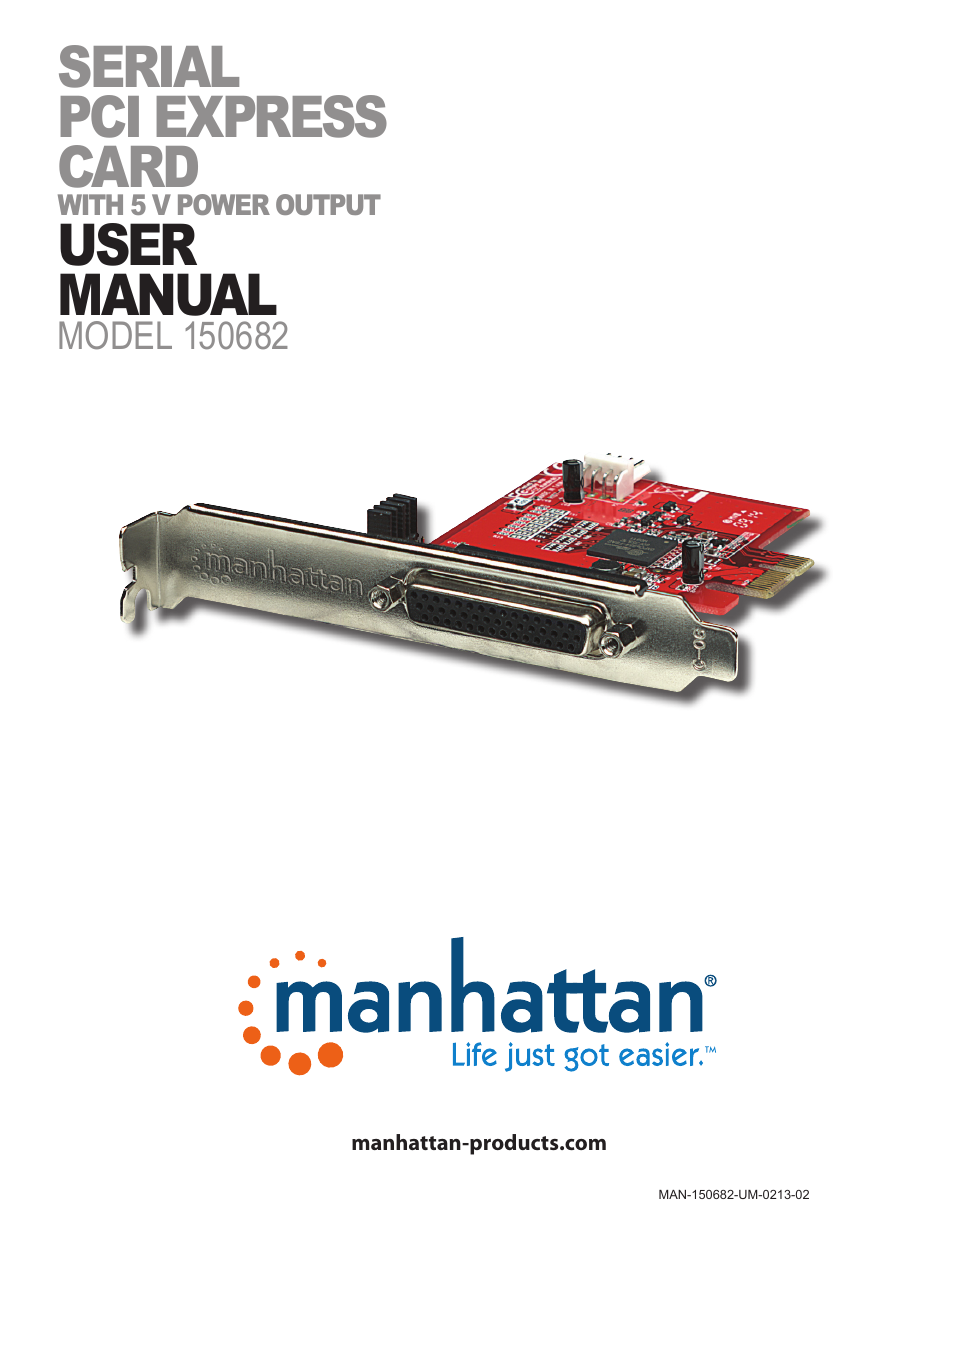 150682 Serial PCI Express Card - Manual